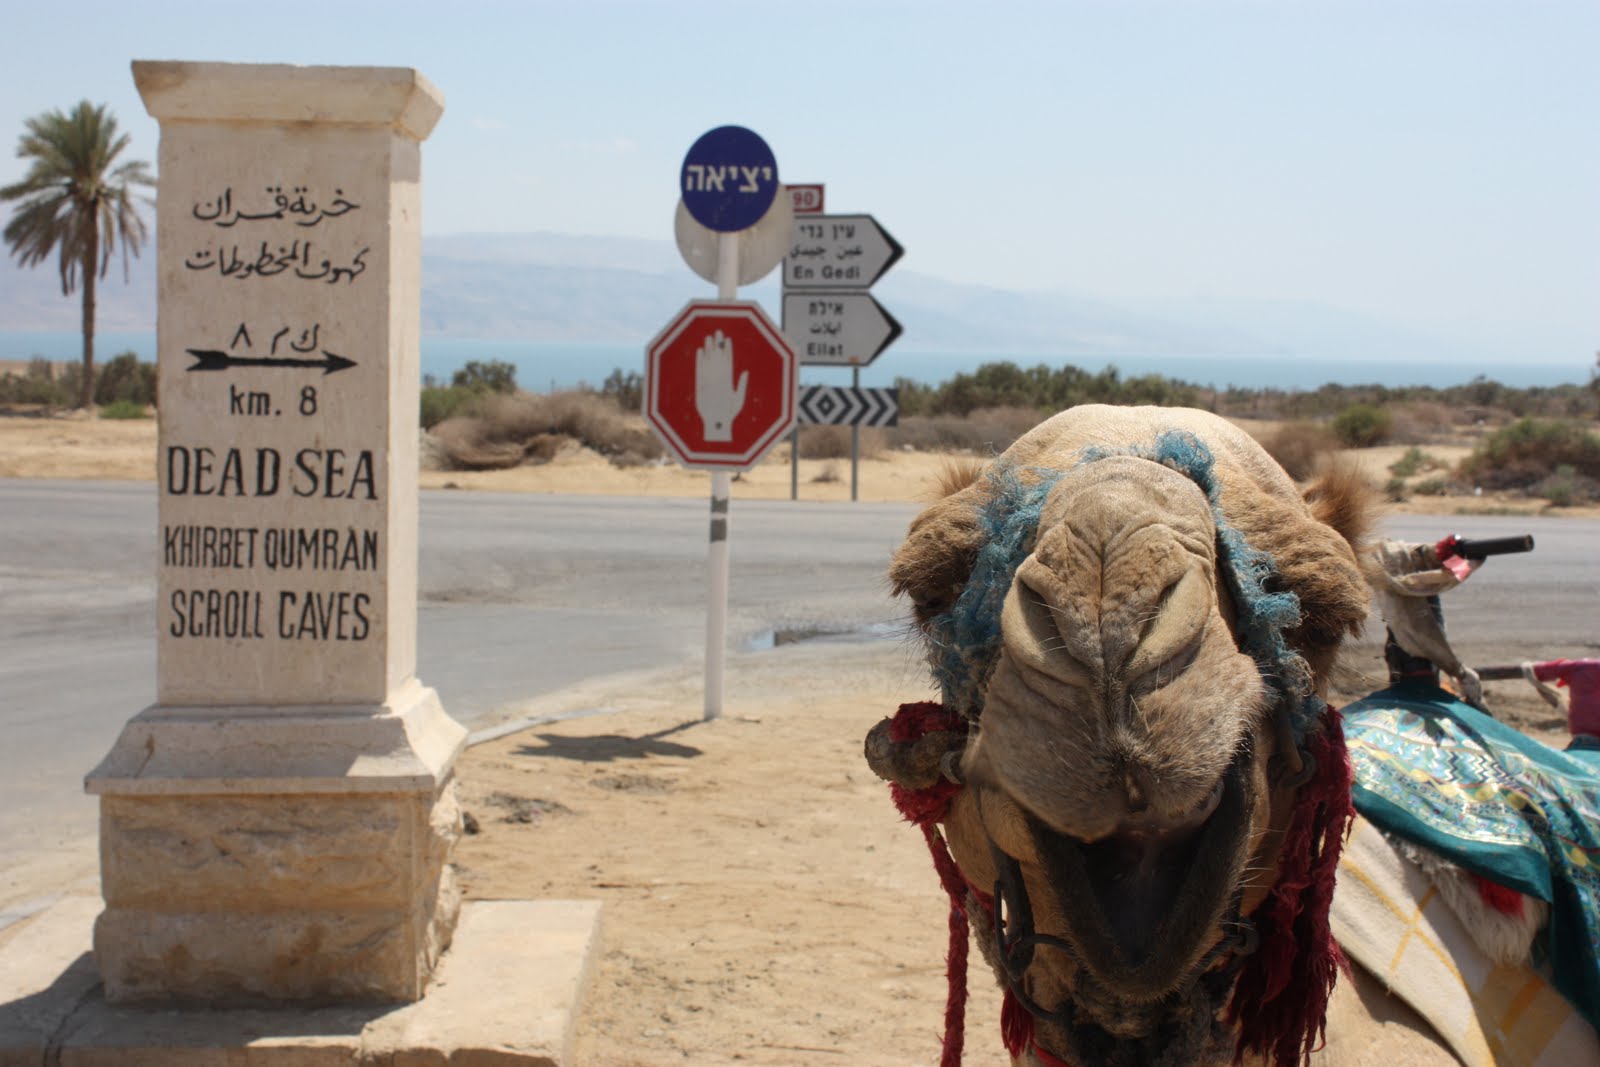 091409_Israel_Dead_Sea_Happy_Camel (c) Deanna Ting